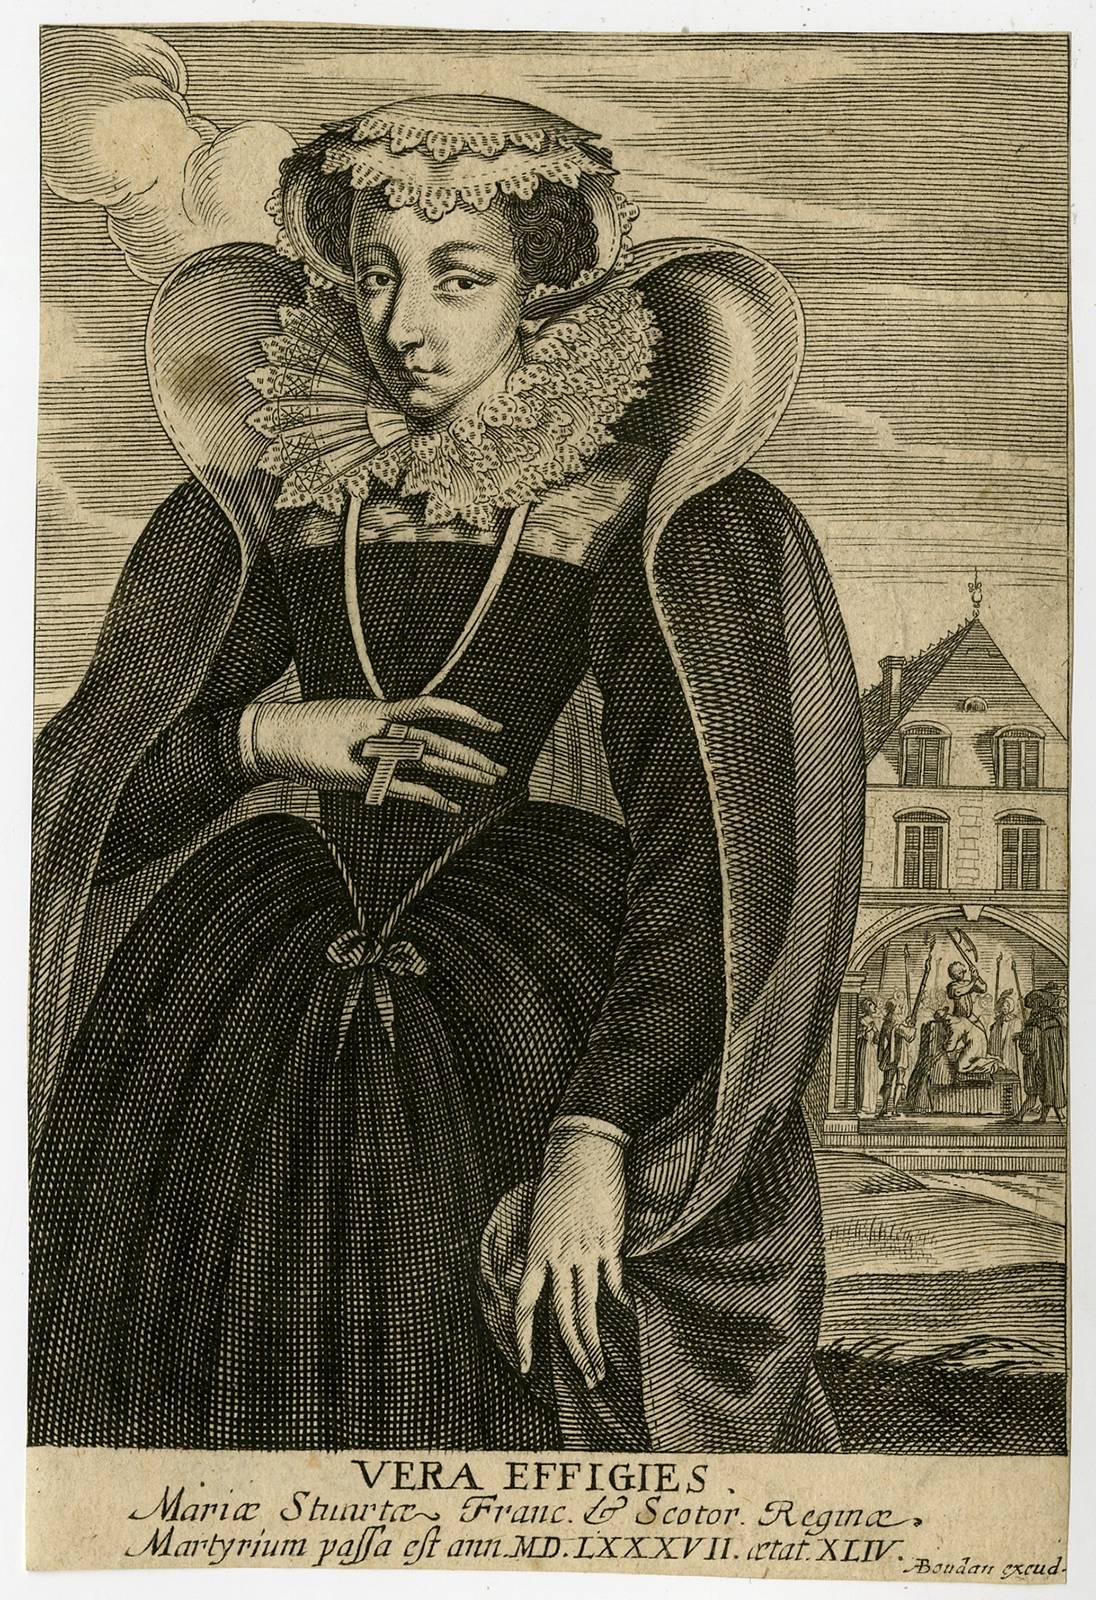 Unknown Portrait Print - Vera effigies Mariae Stuartae [..]. Portrait of Mary Stuart, queen of Scots.